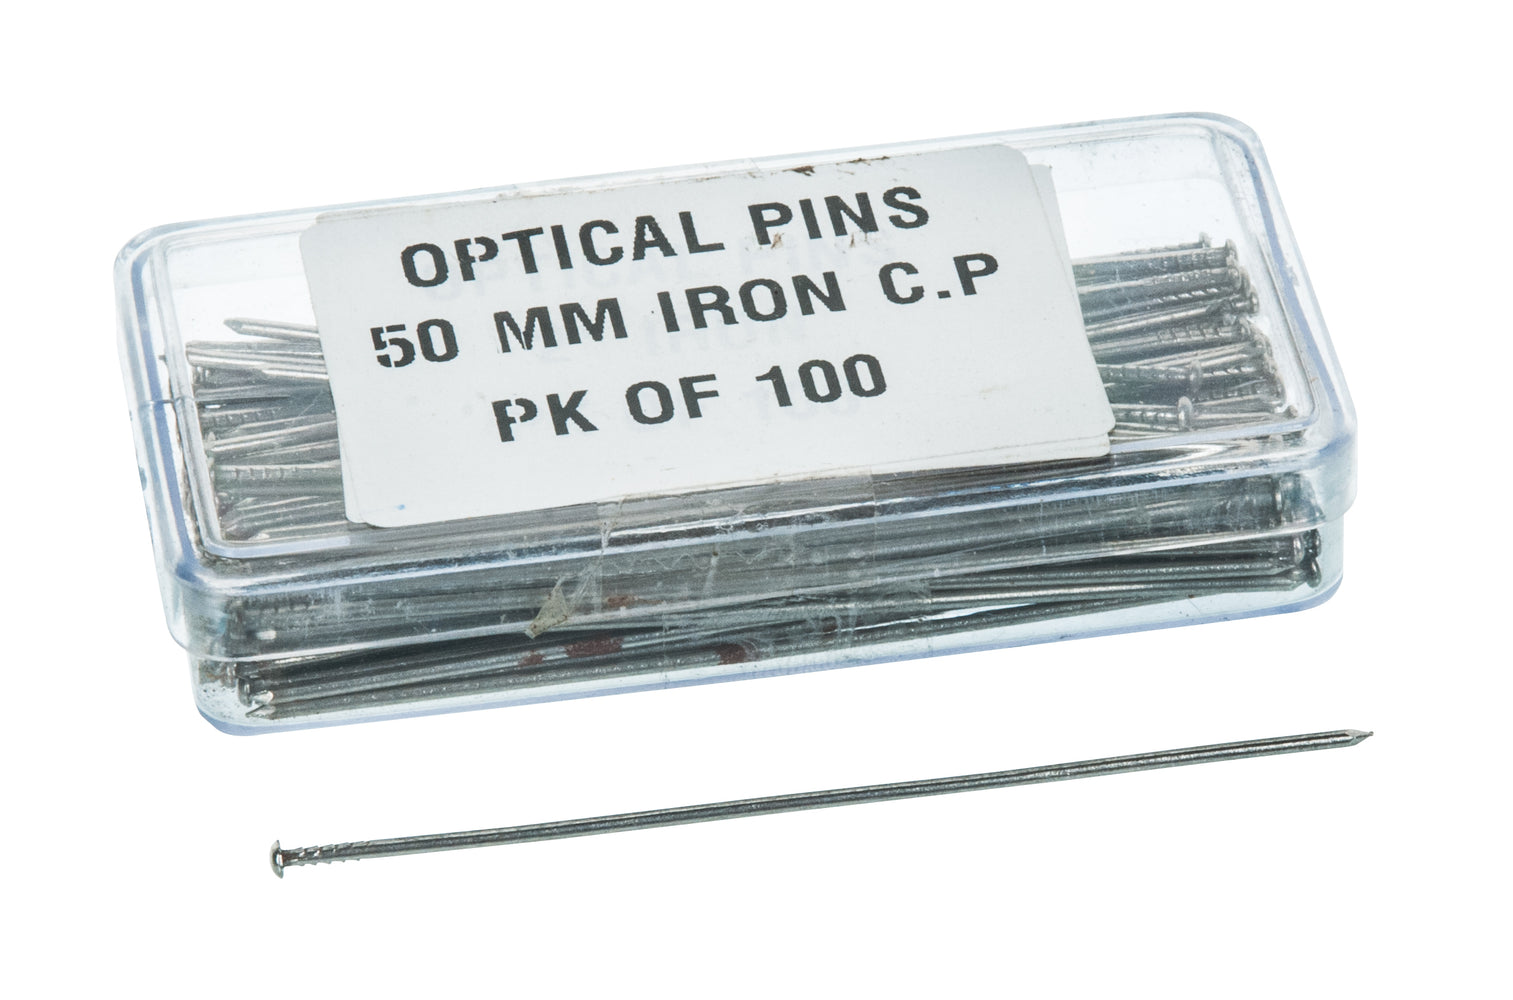 Pins for Optics Experiments, Length 50 mm, pk of 100